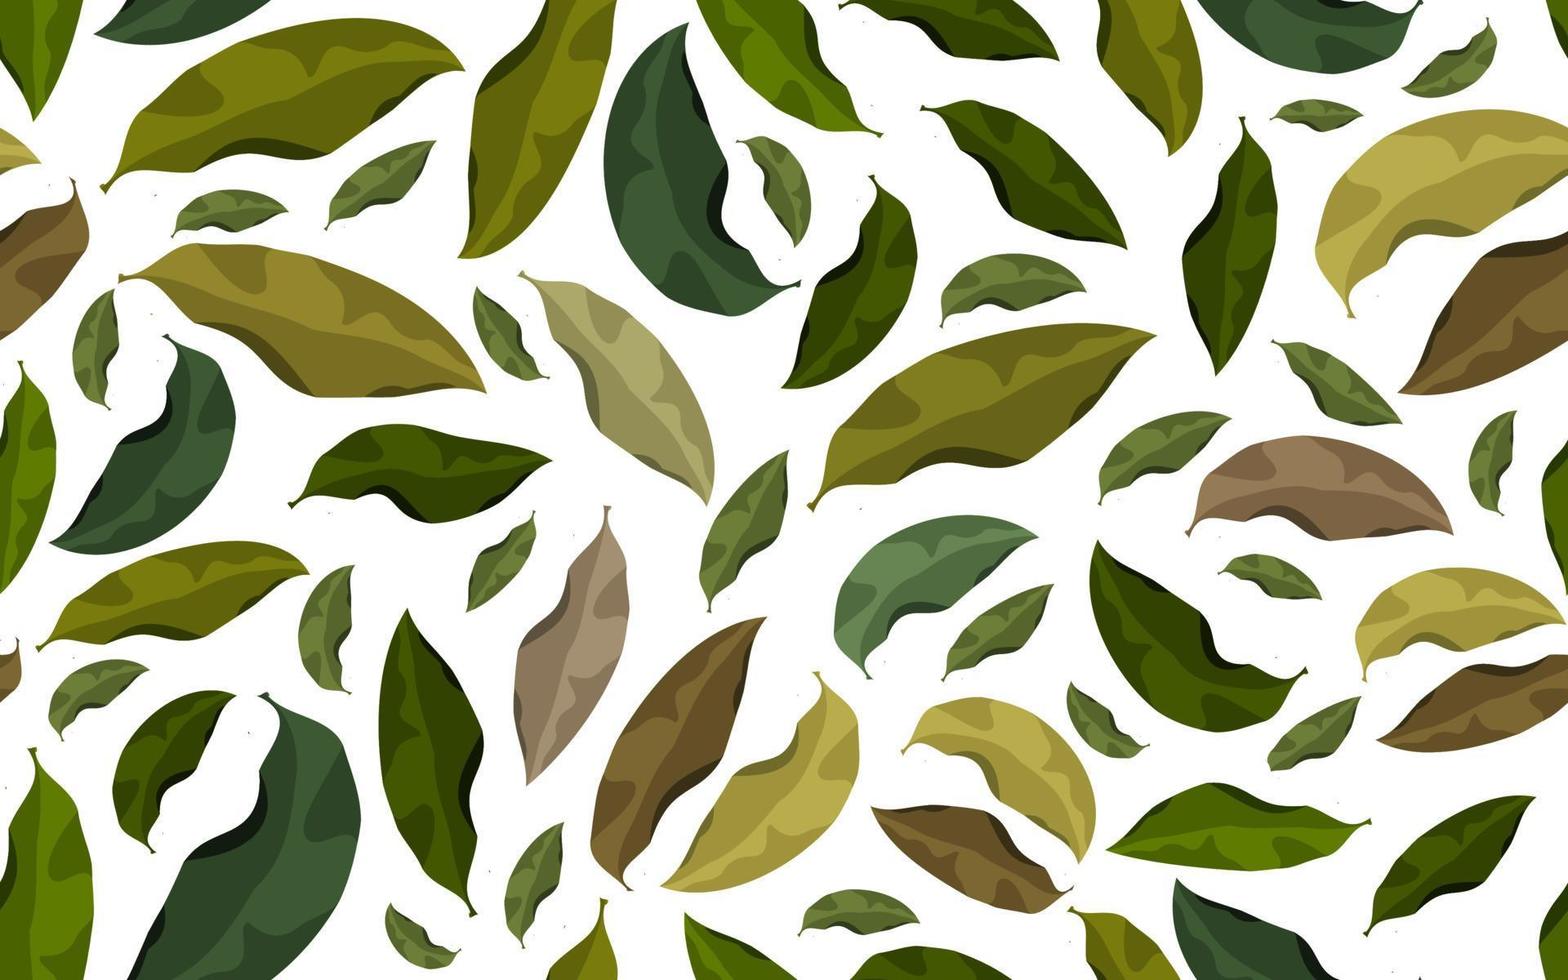 kleurrijk abstract blad naadloos patroon vector